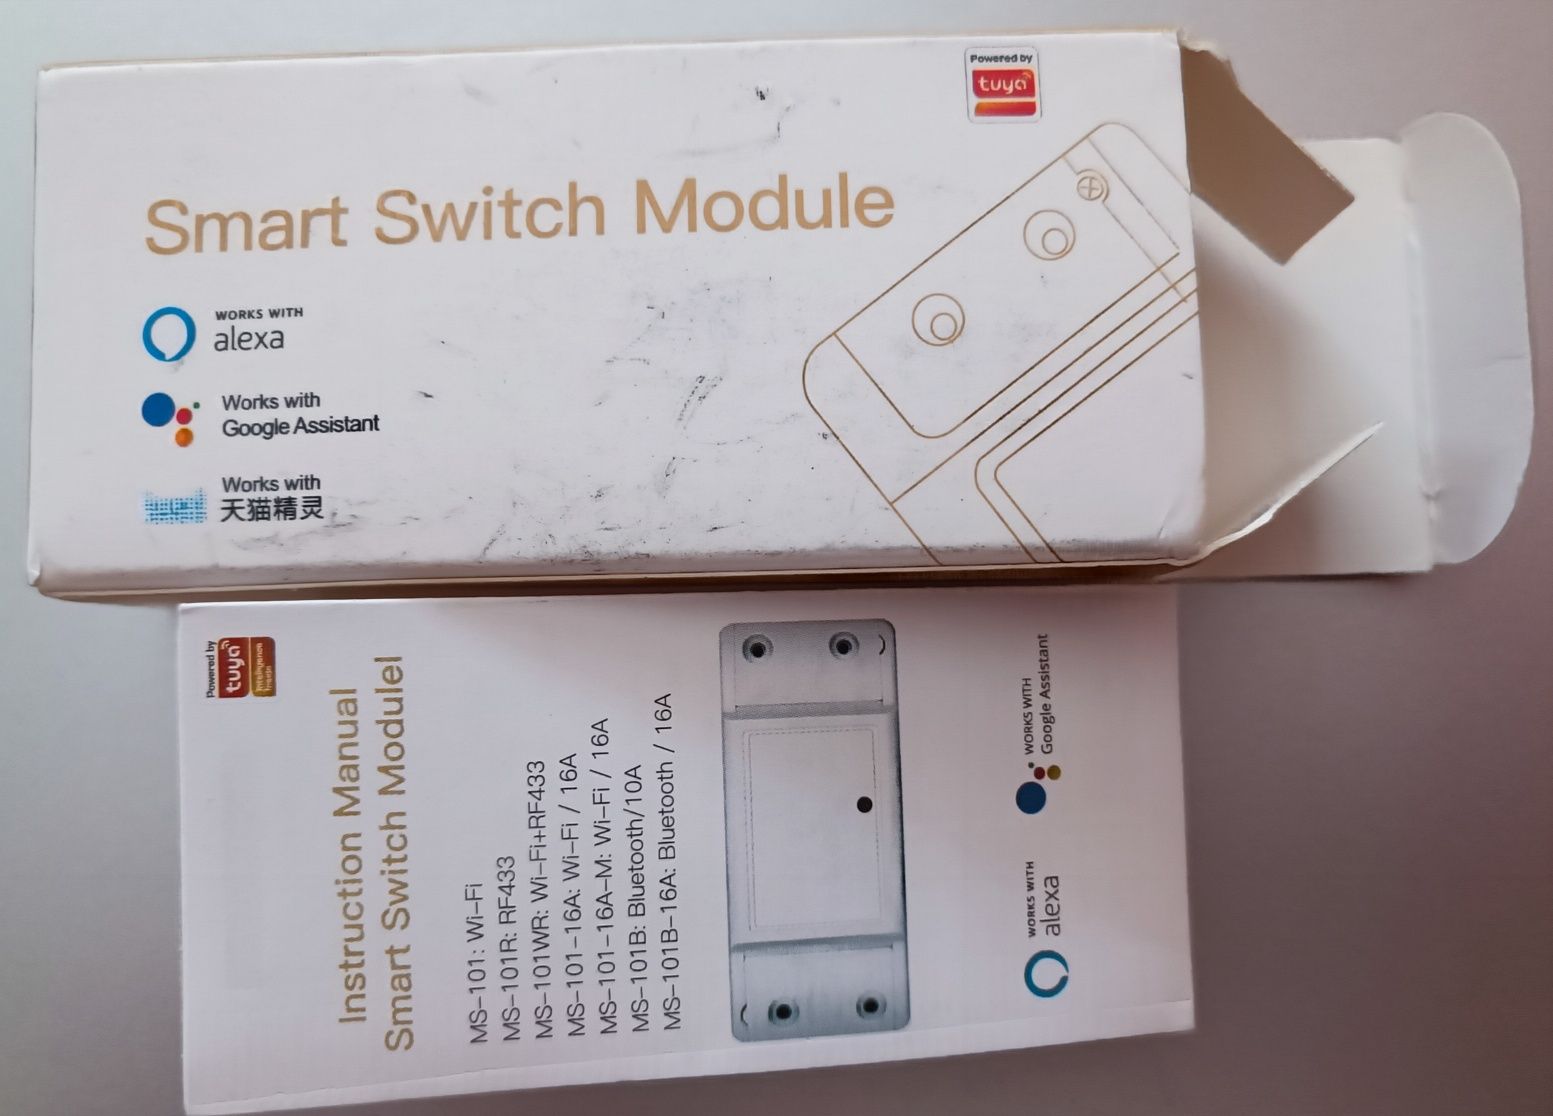 Smart swith mobule wi-fi